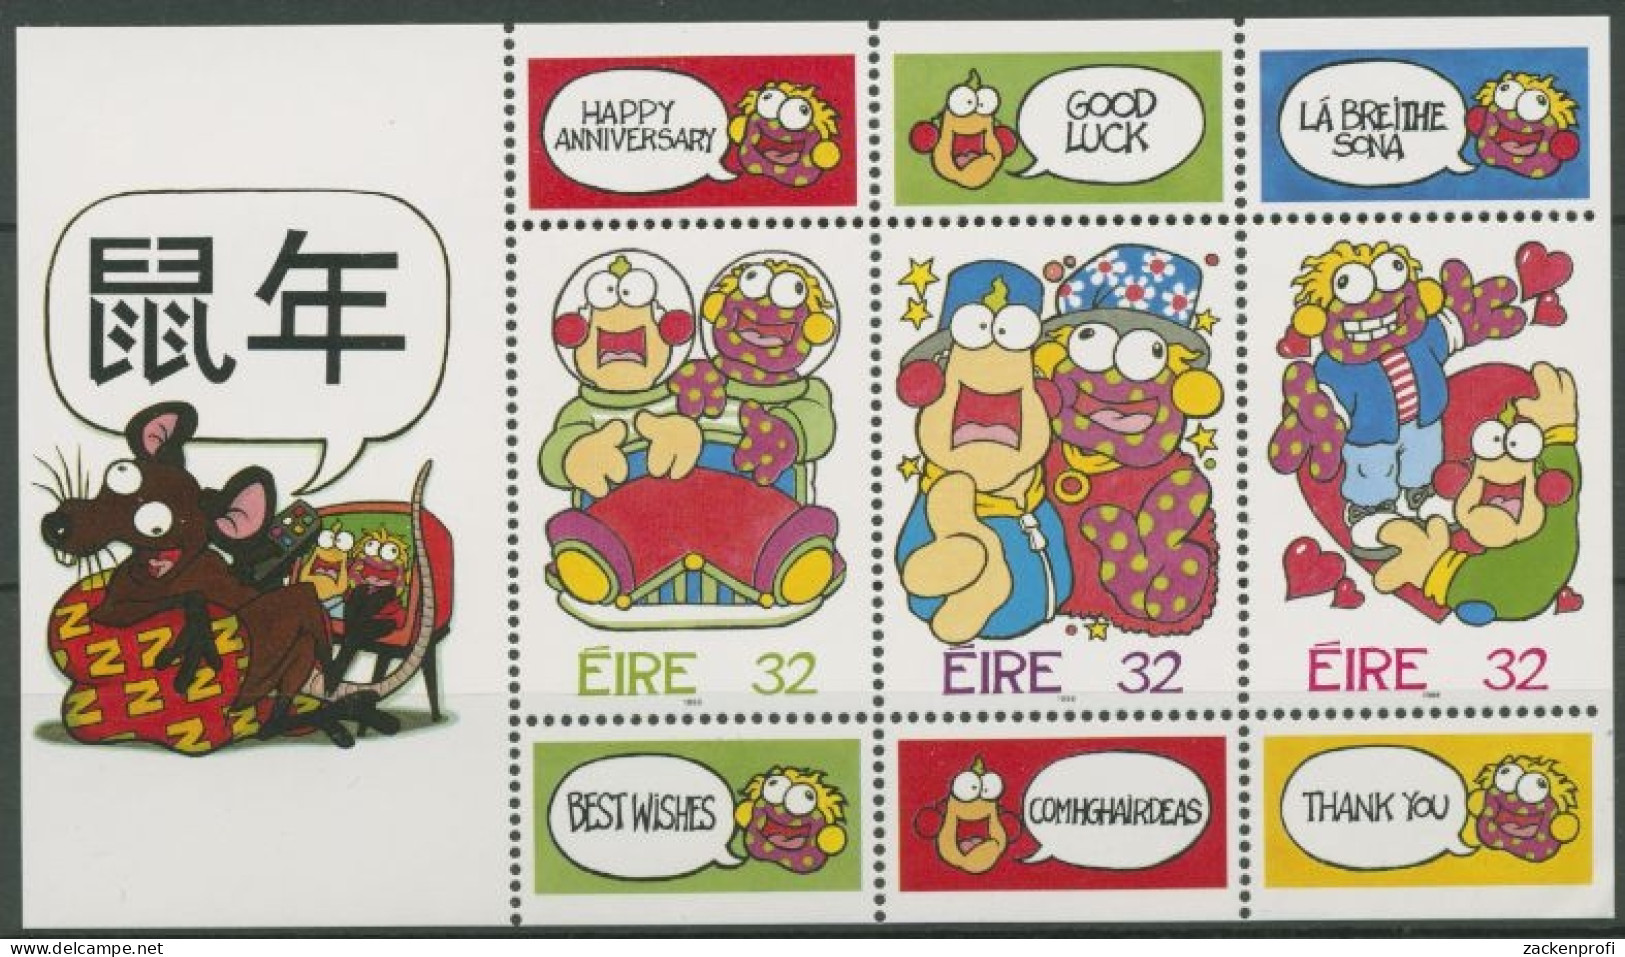 Irland 1996 Grußmarken Block 17 Postfrisch (C16303) - Blocks & Sheetlets